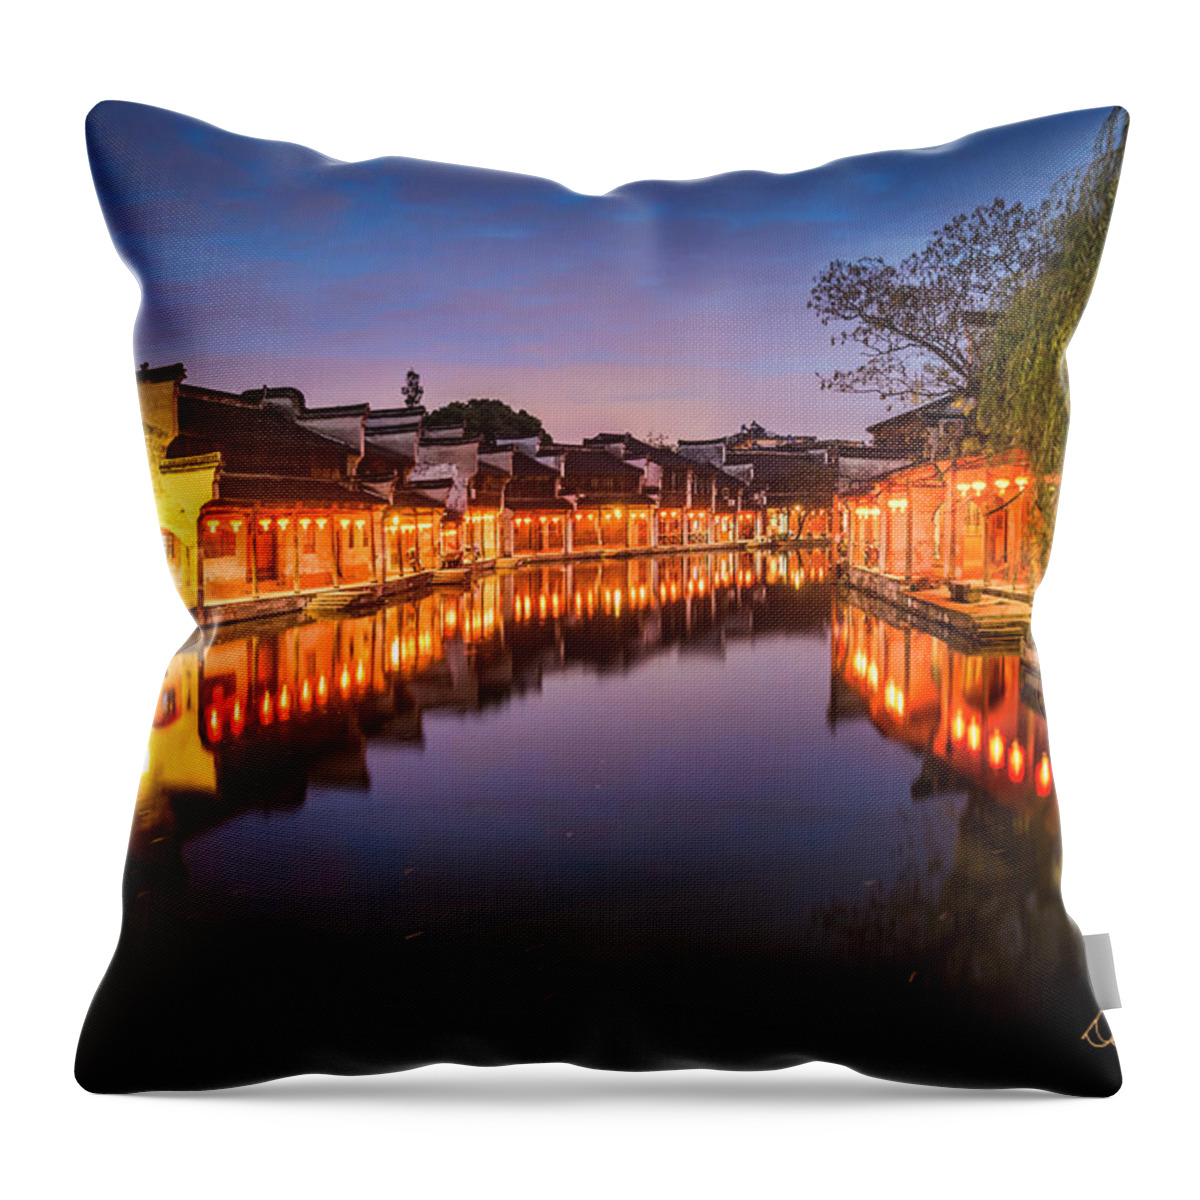 China Throw Pillow featuring the photograph Nanxun Night by Dan McGeorge